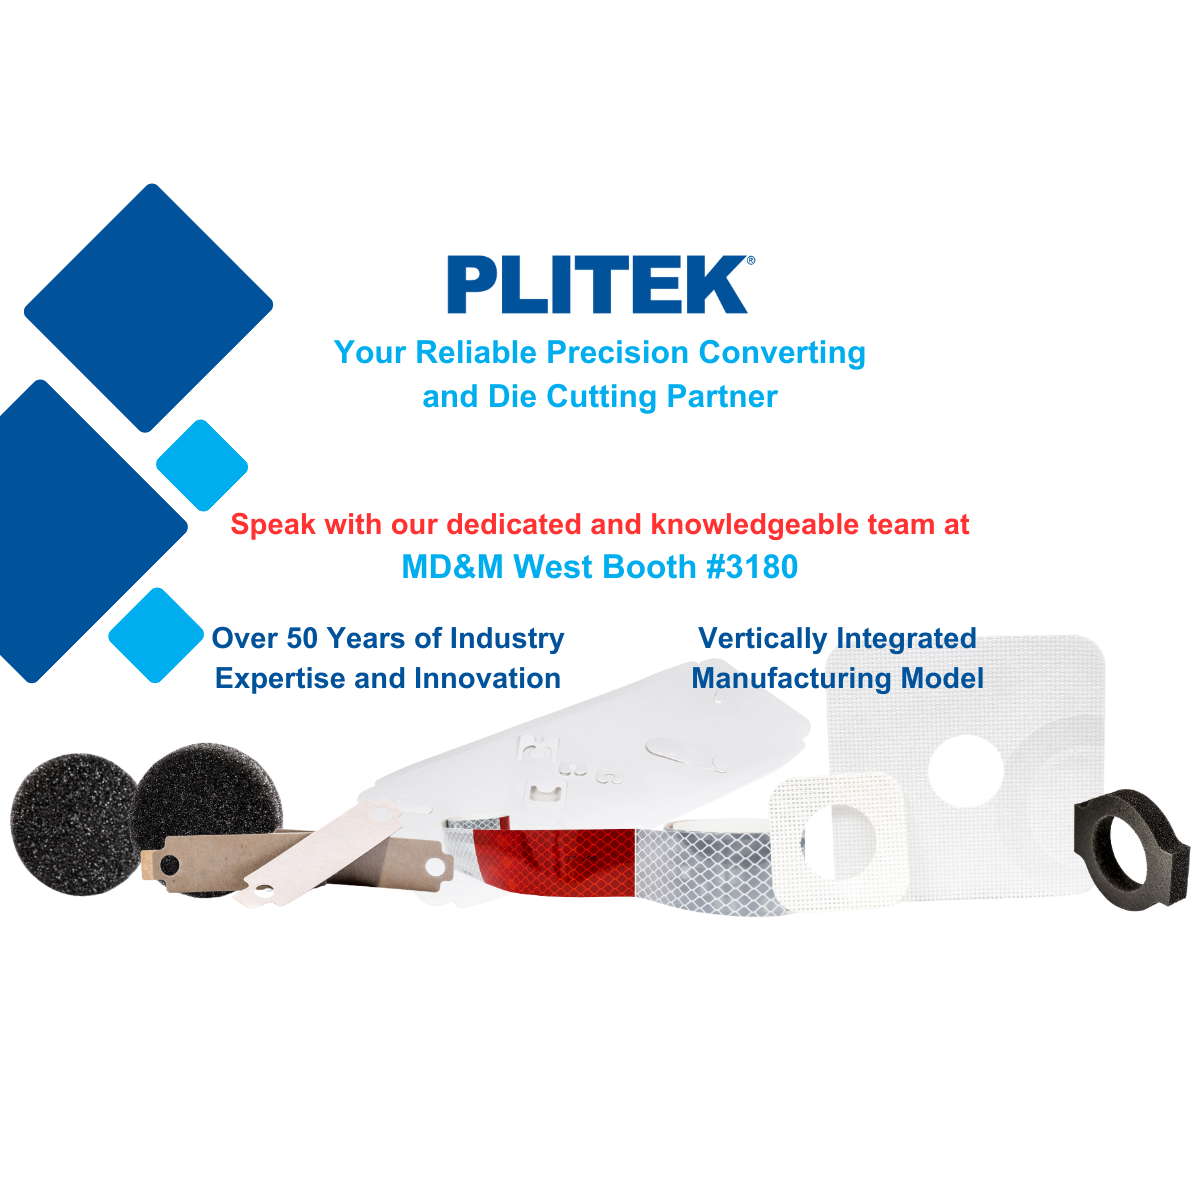 Visit PLITEK at MDM West booth 3180 - Precision Die Cutting and Converting